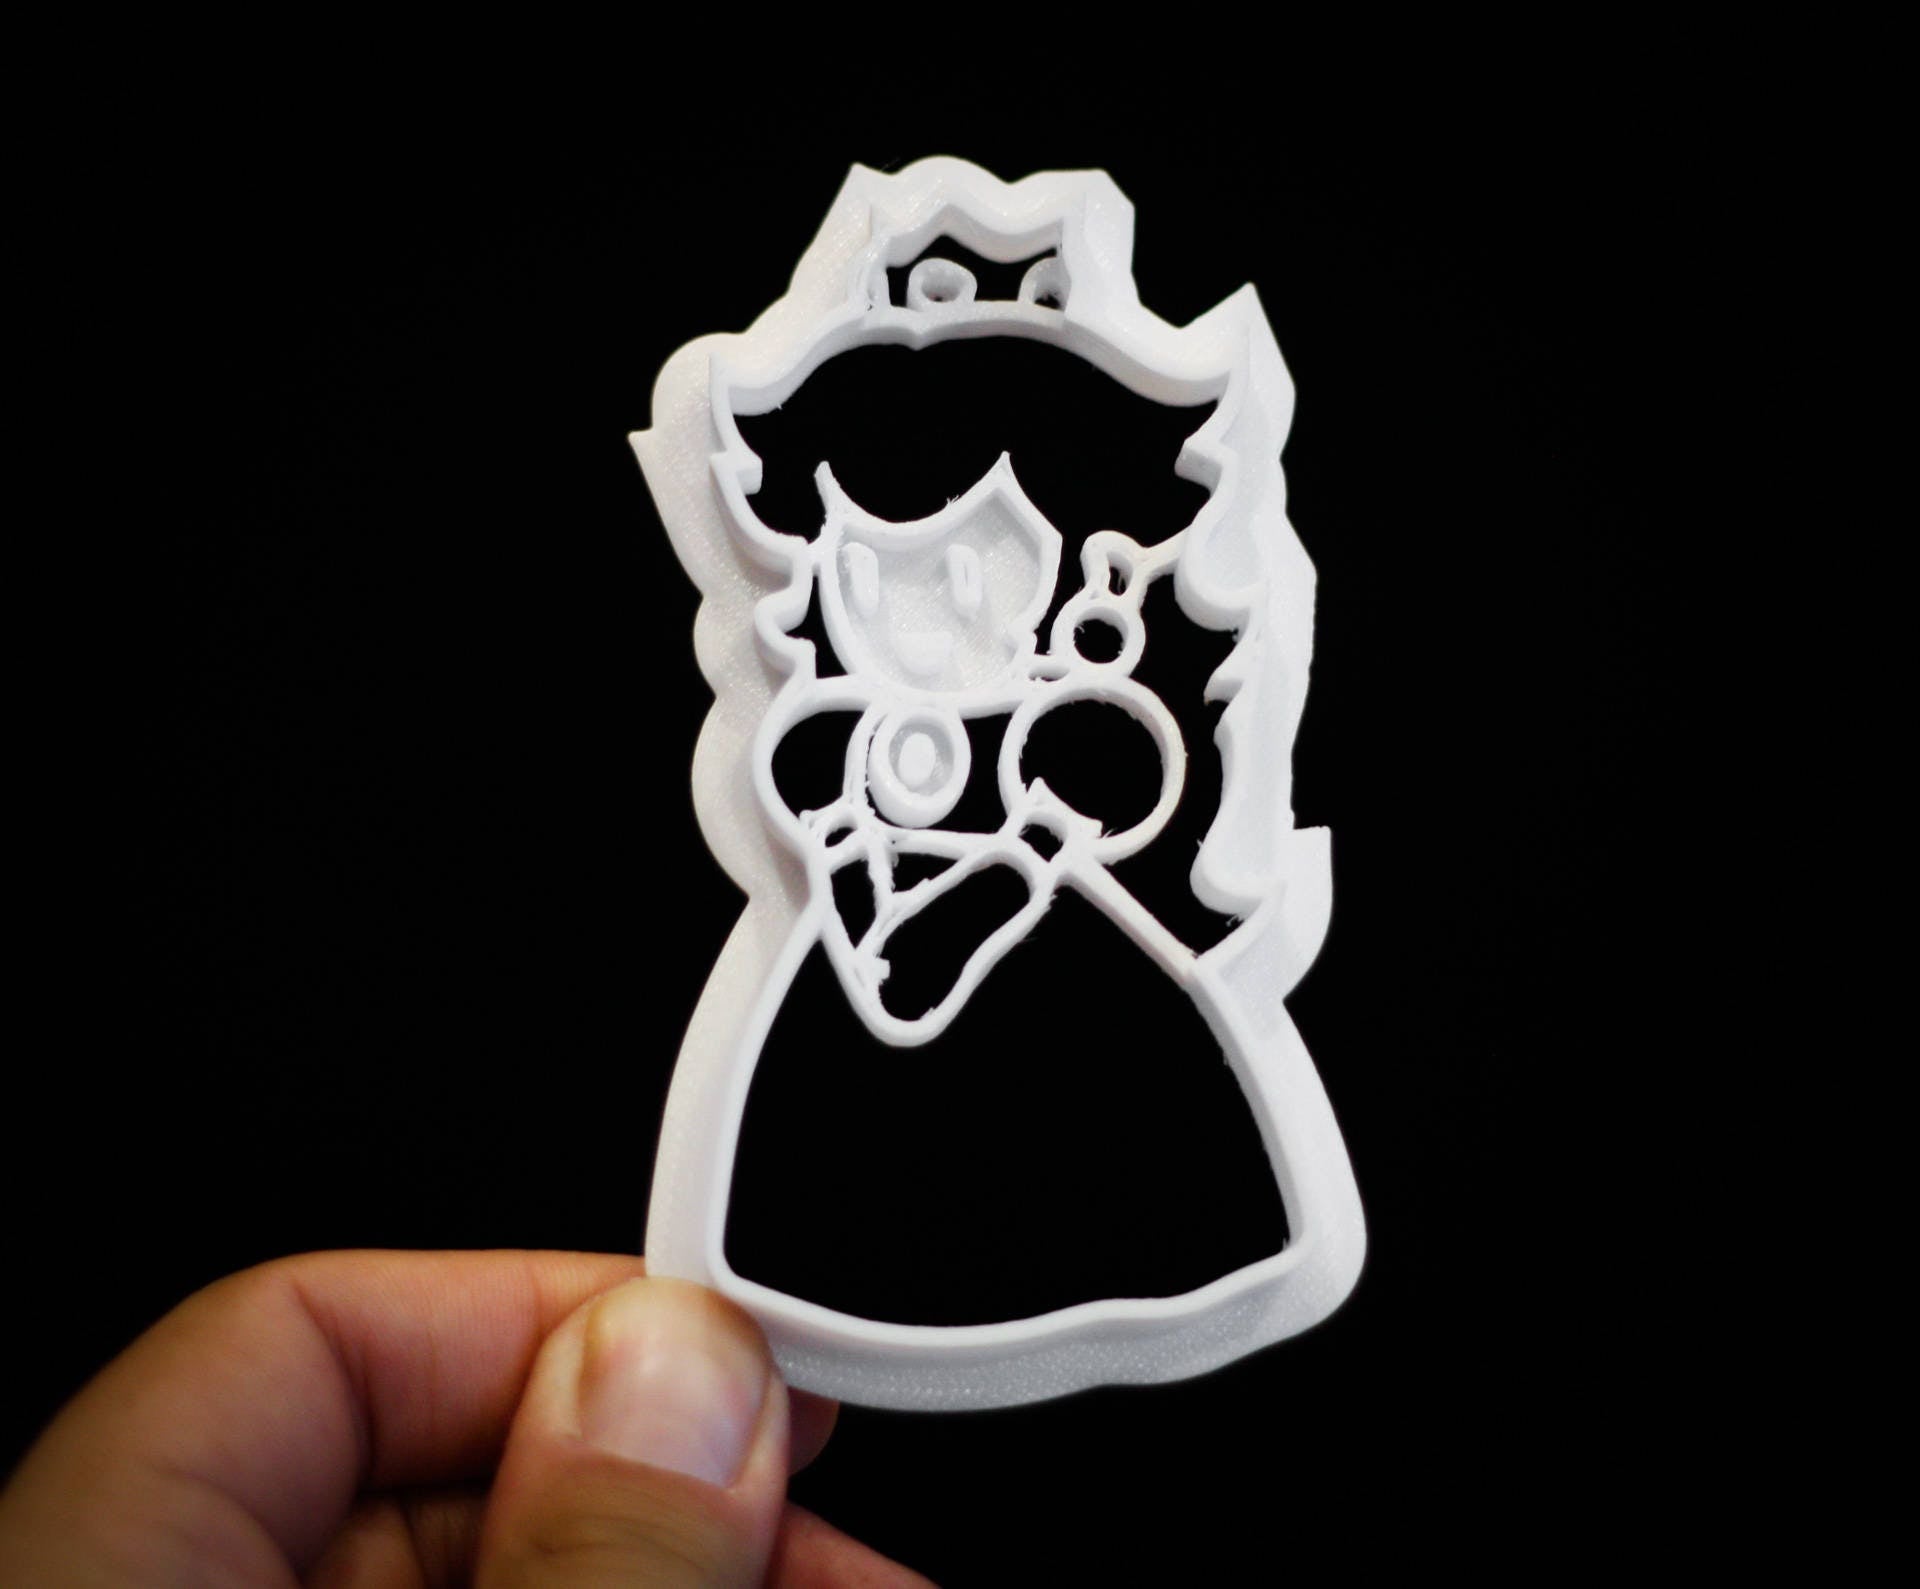 Super Mario Princess Peach Toadstool Cookie Cutter for Super mario bros Birthday Party - 3DPrintProps